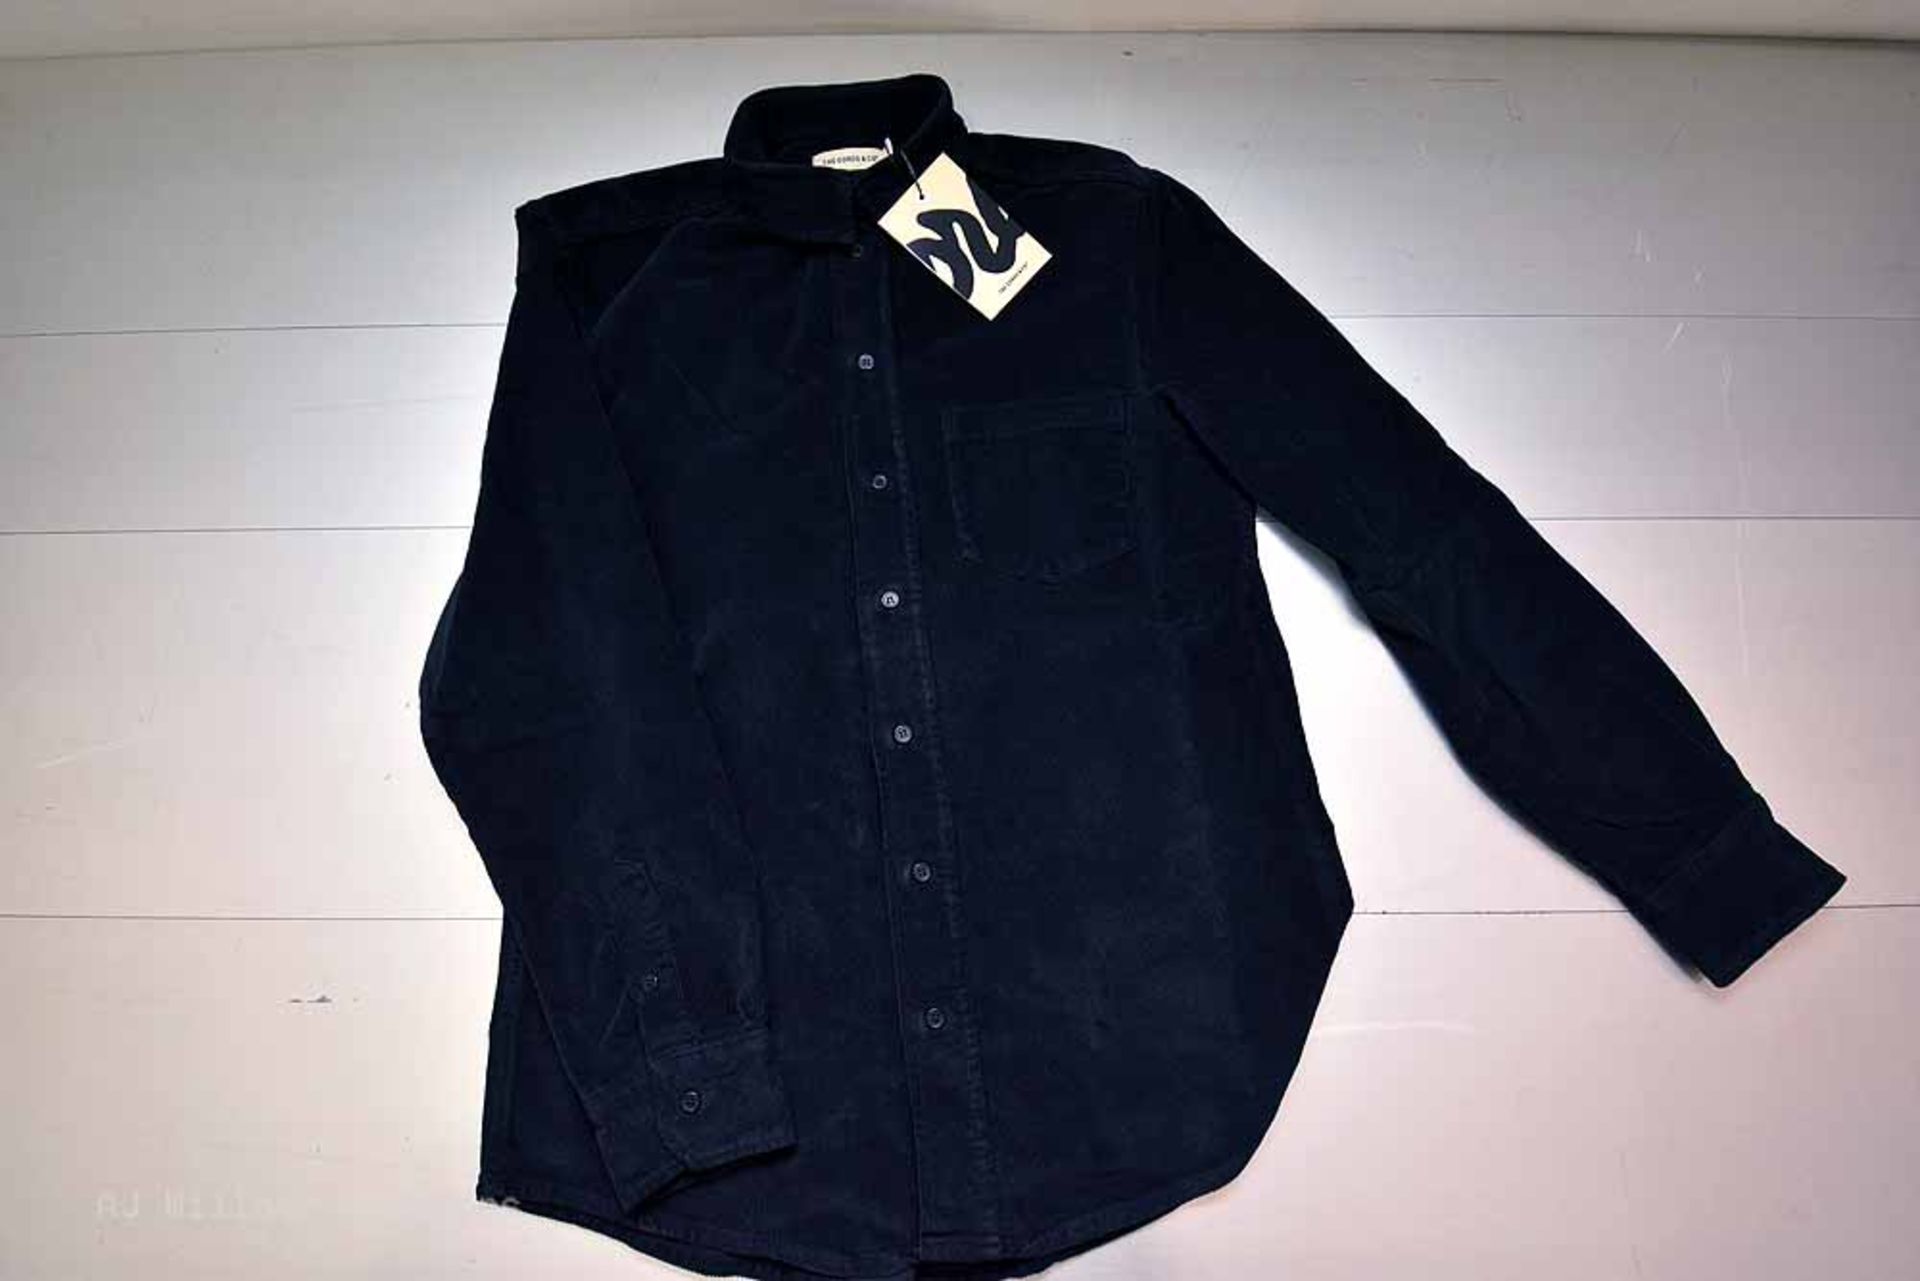 The Cords & Co. "Odd" Style, Uni-Sex Collard Long Sleeve Shirt(Black) Small, Medium, Large, X-Large - Image 3 of 6